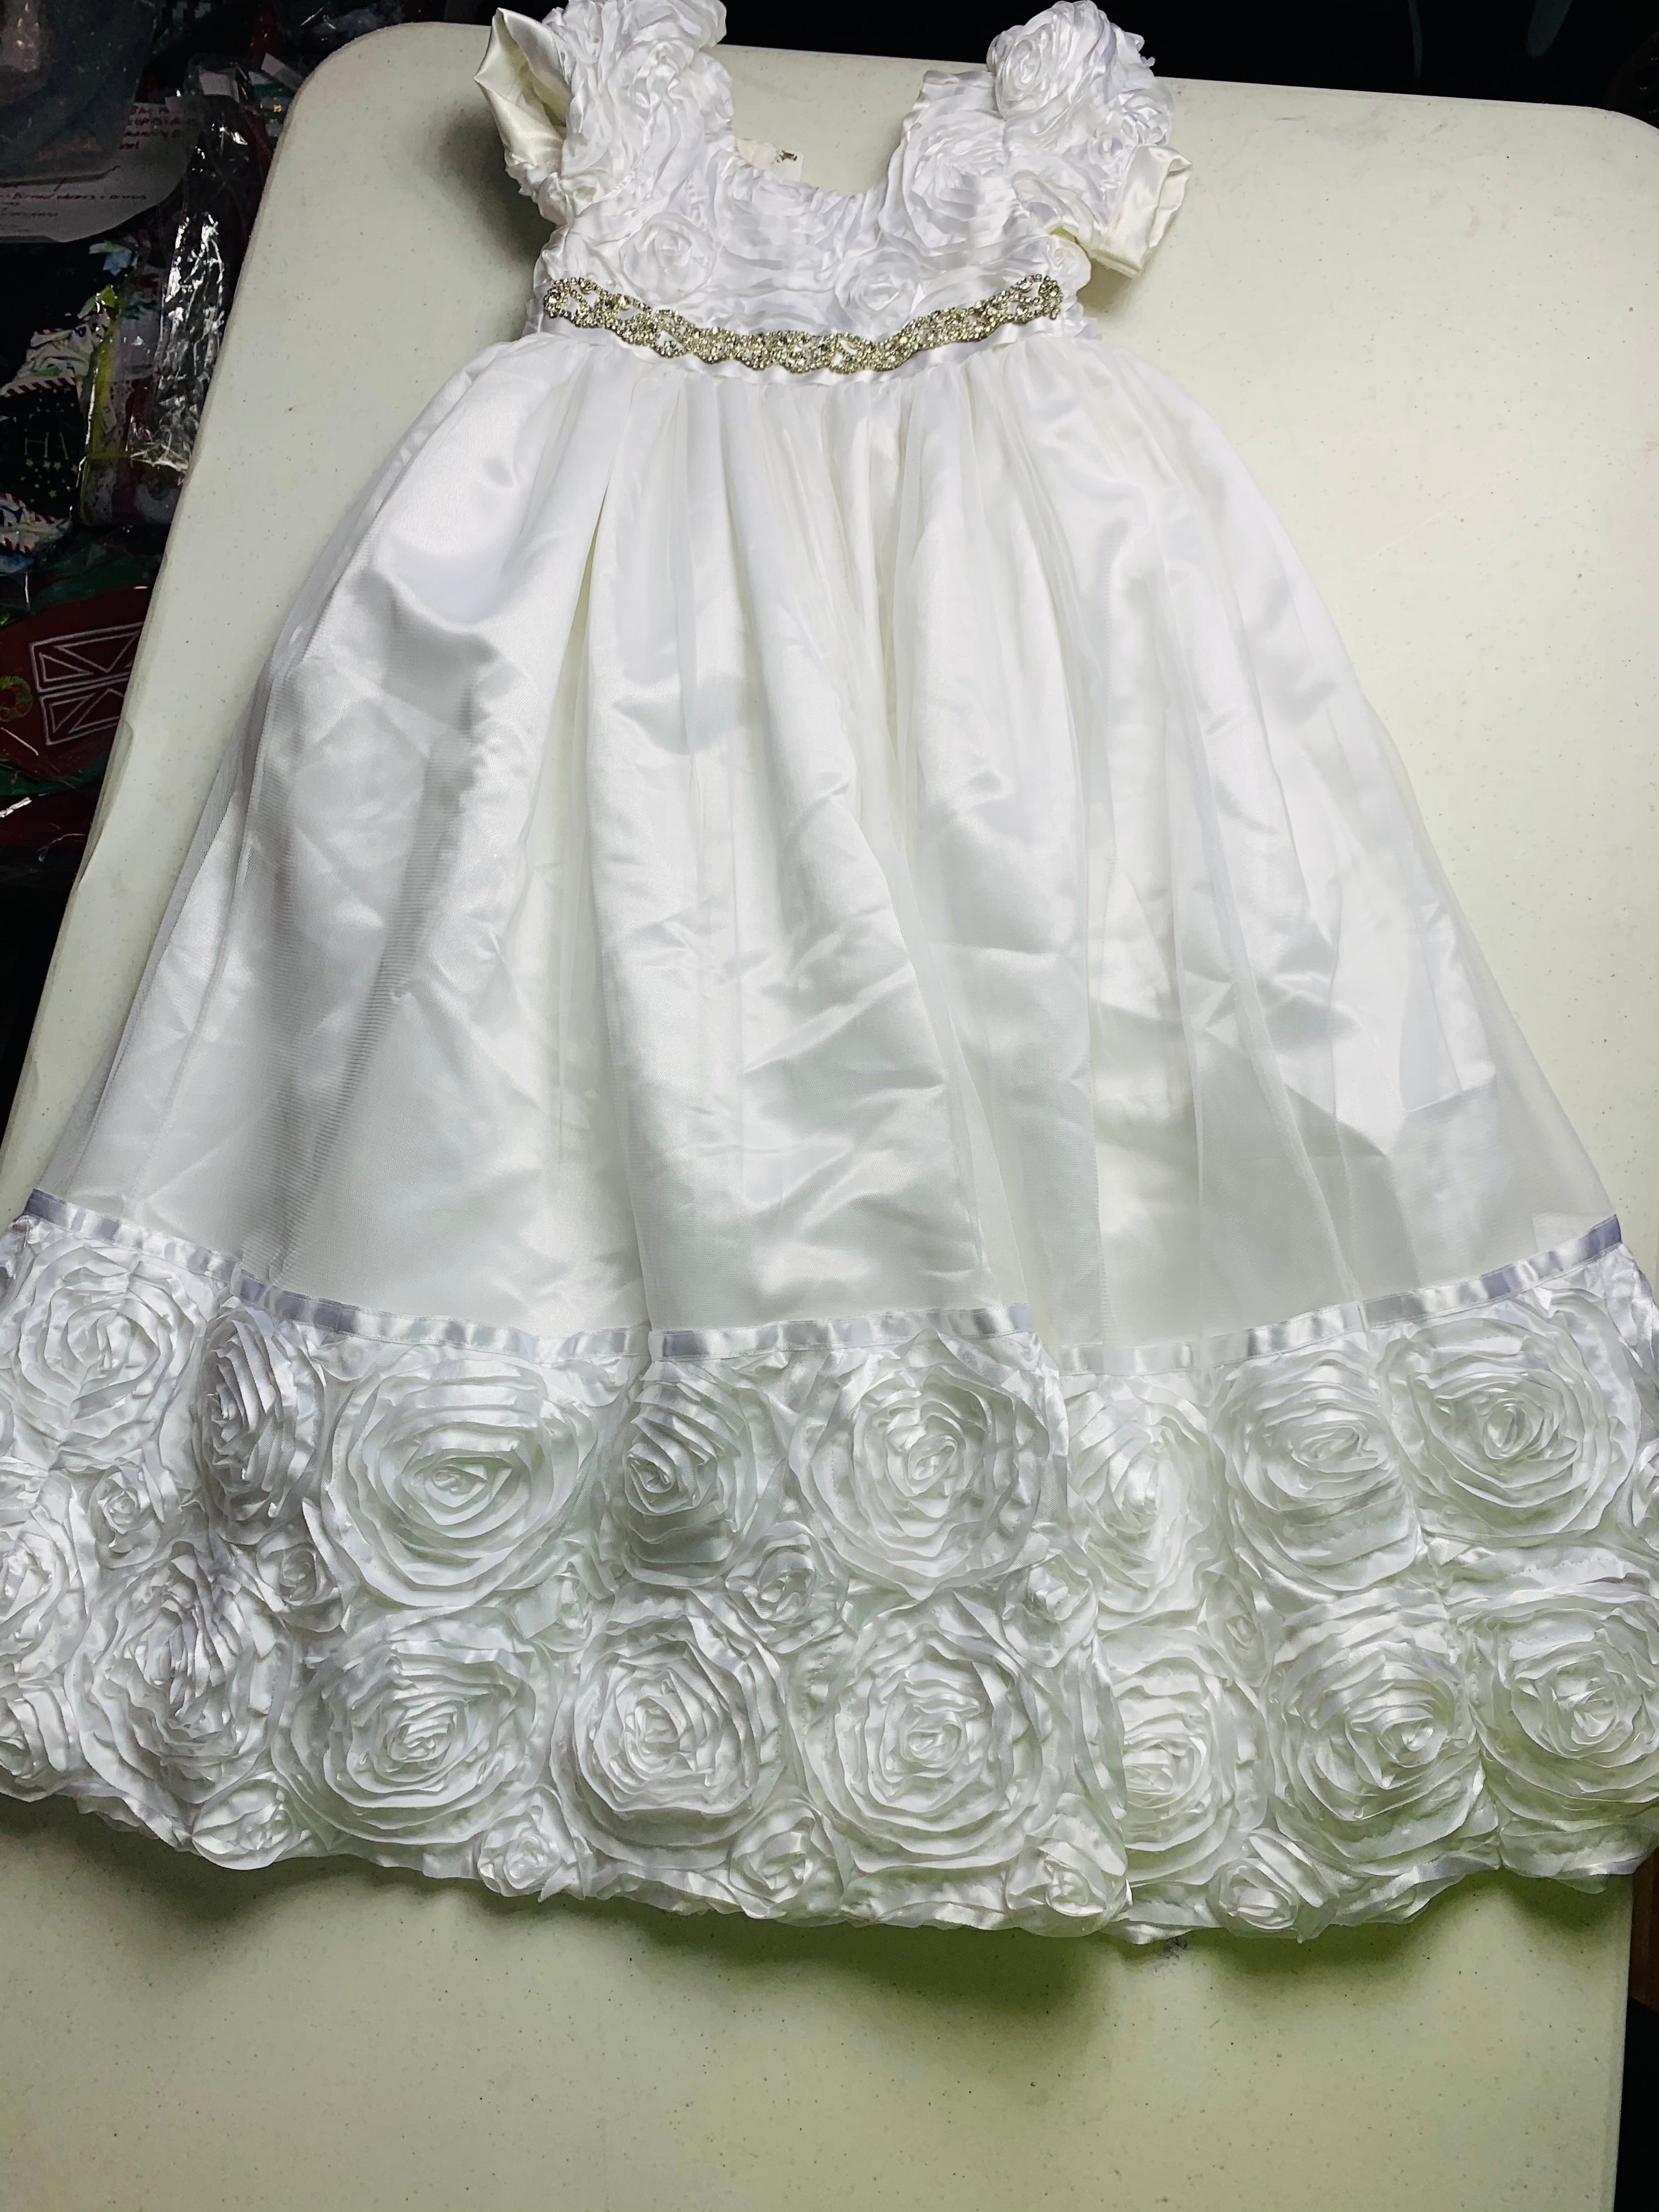 Resell White Floor Length Formal Dress Size 6🧵